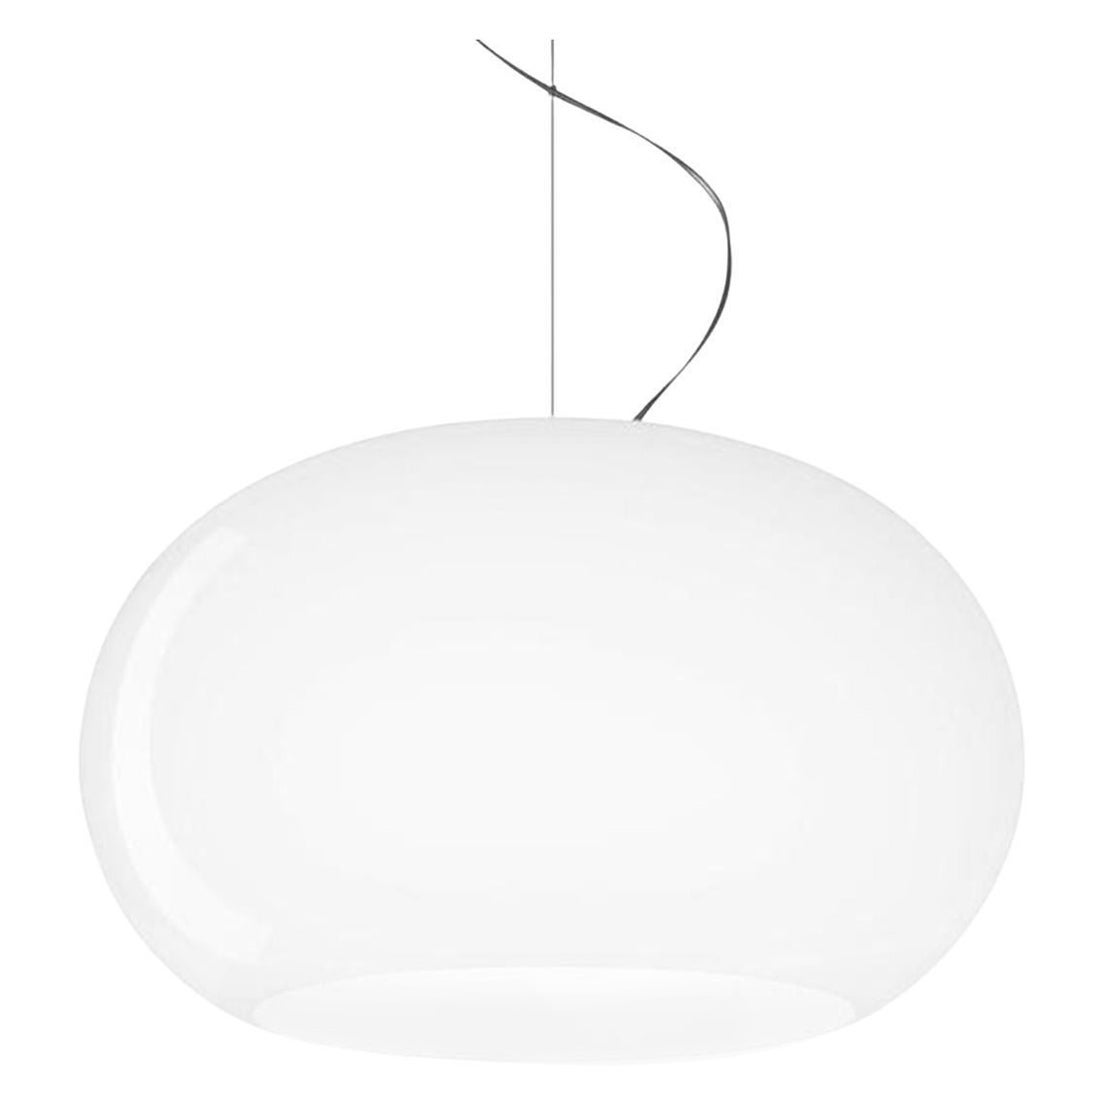 Rodolfo Dordoni ‘Buds 2’ Handblown Glass Led Pendant Lamp in White for Foscarini For Sale